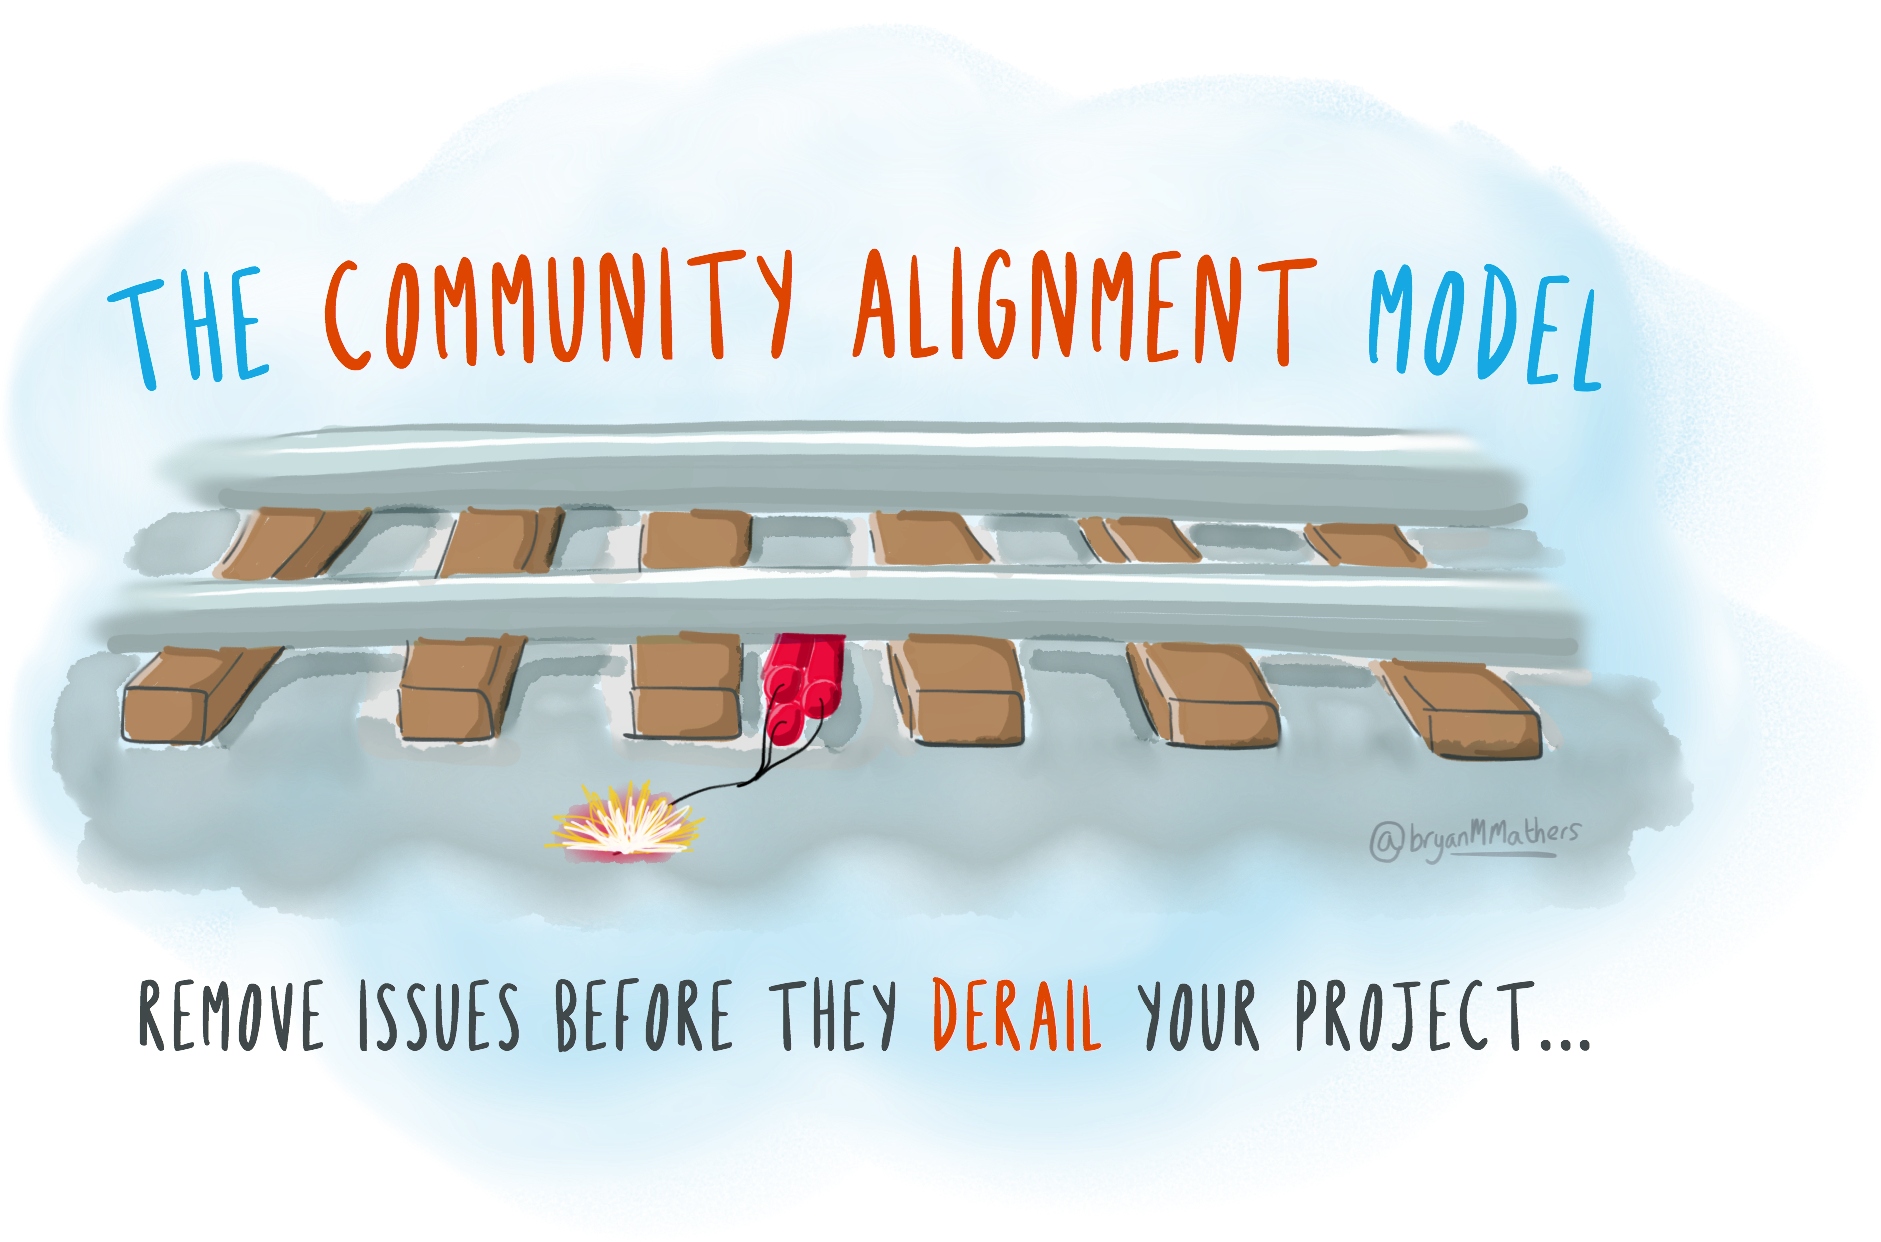 The Community Alignment model